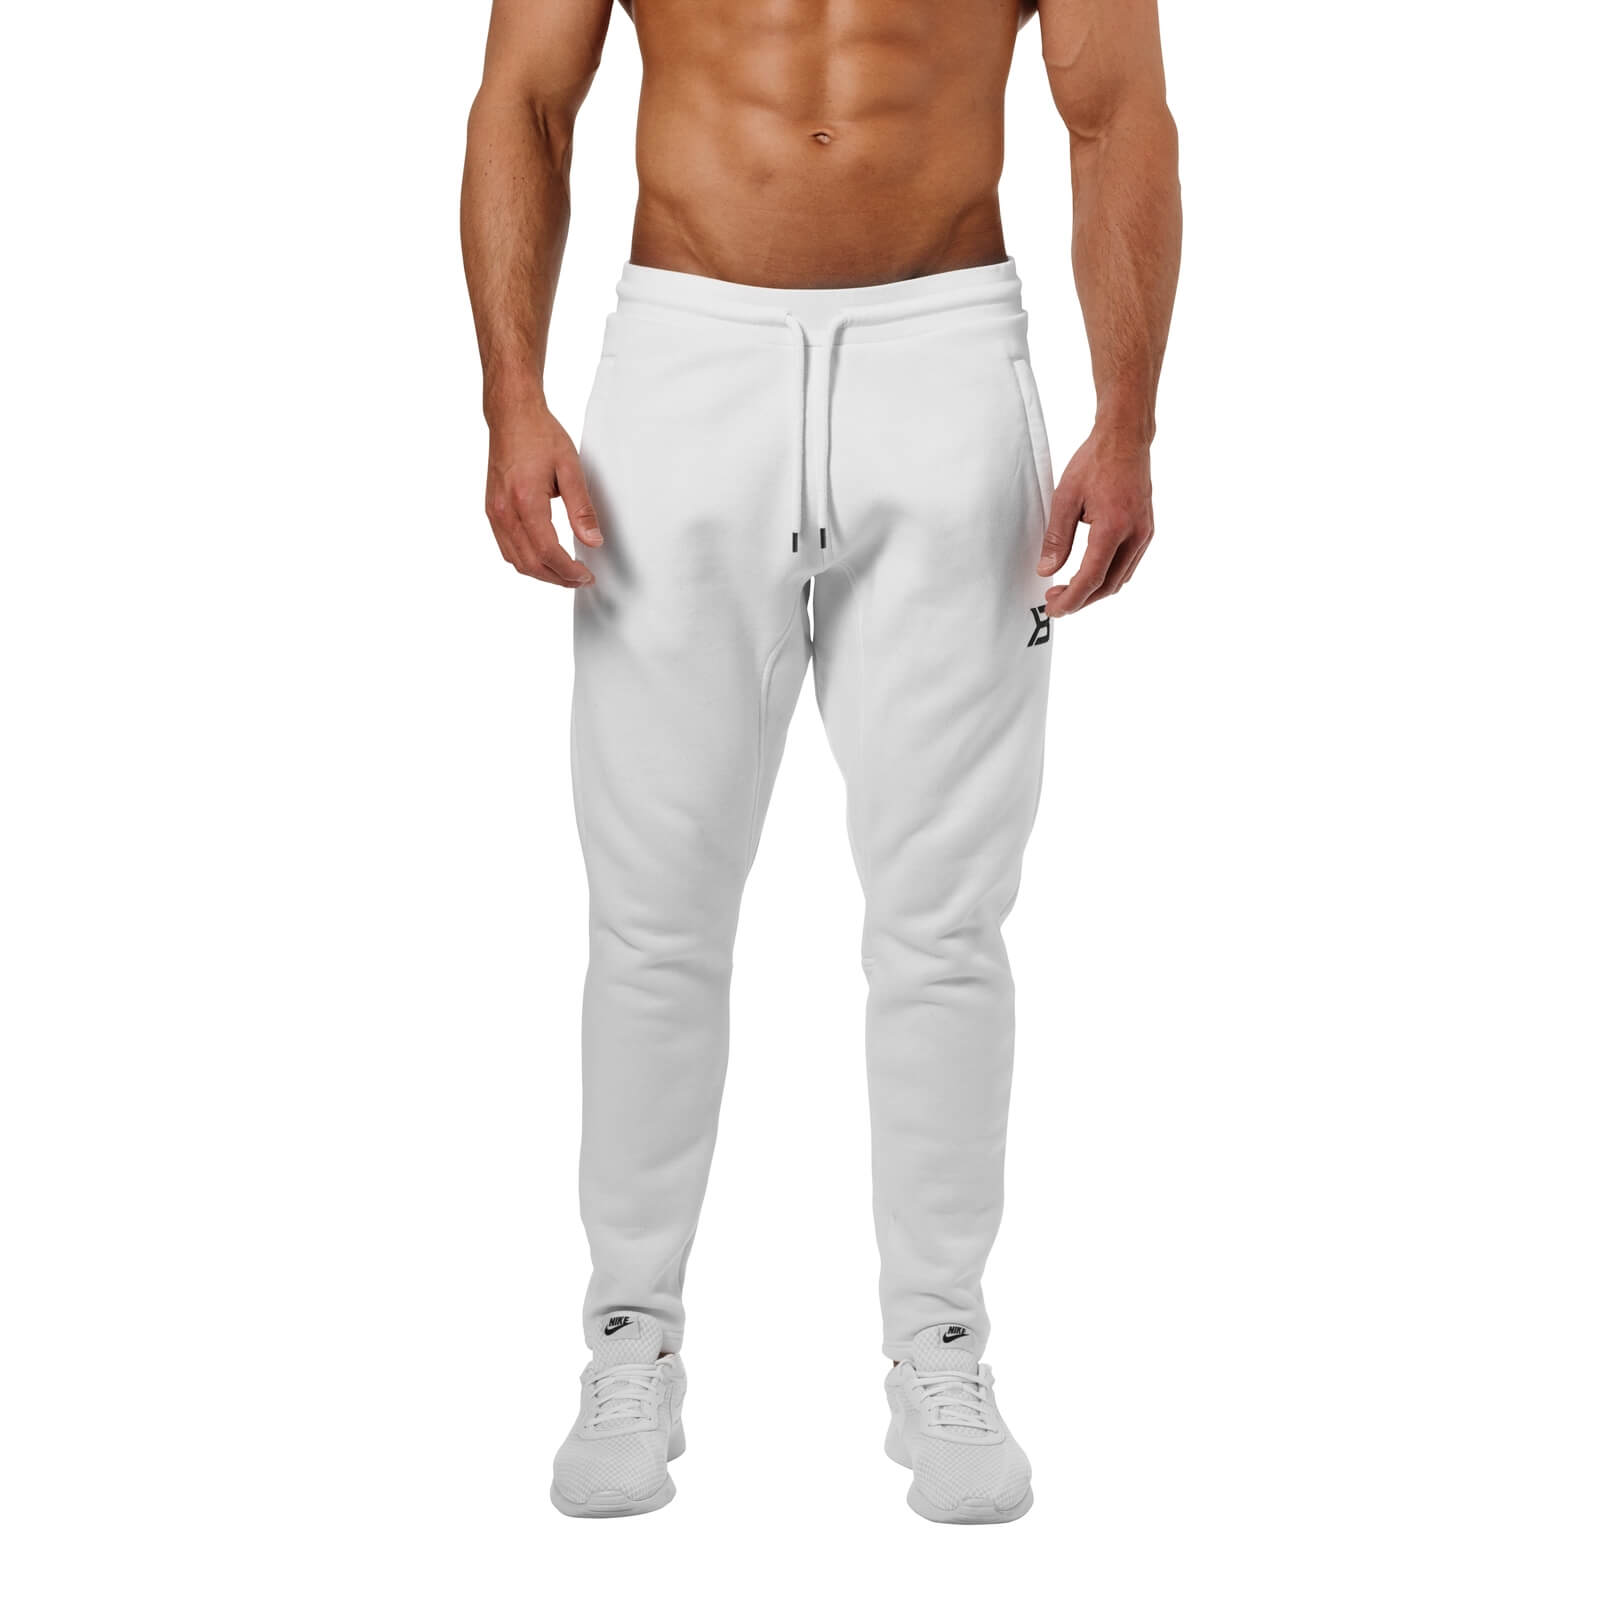 Kolla in Astor Sweatpants, white, Better Bodies hos SportGymButiken.se